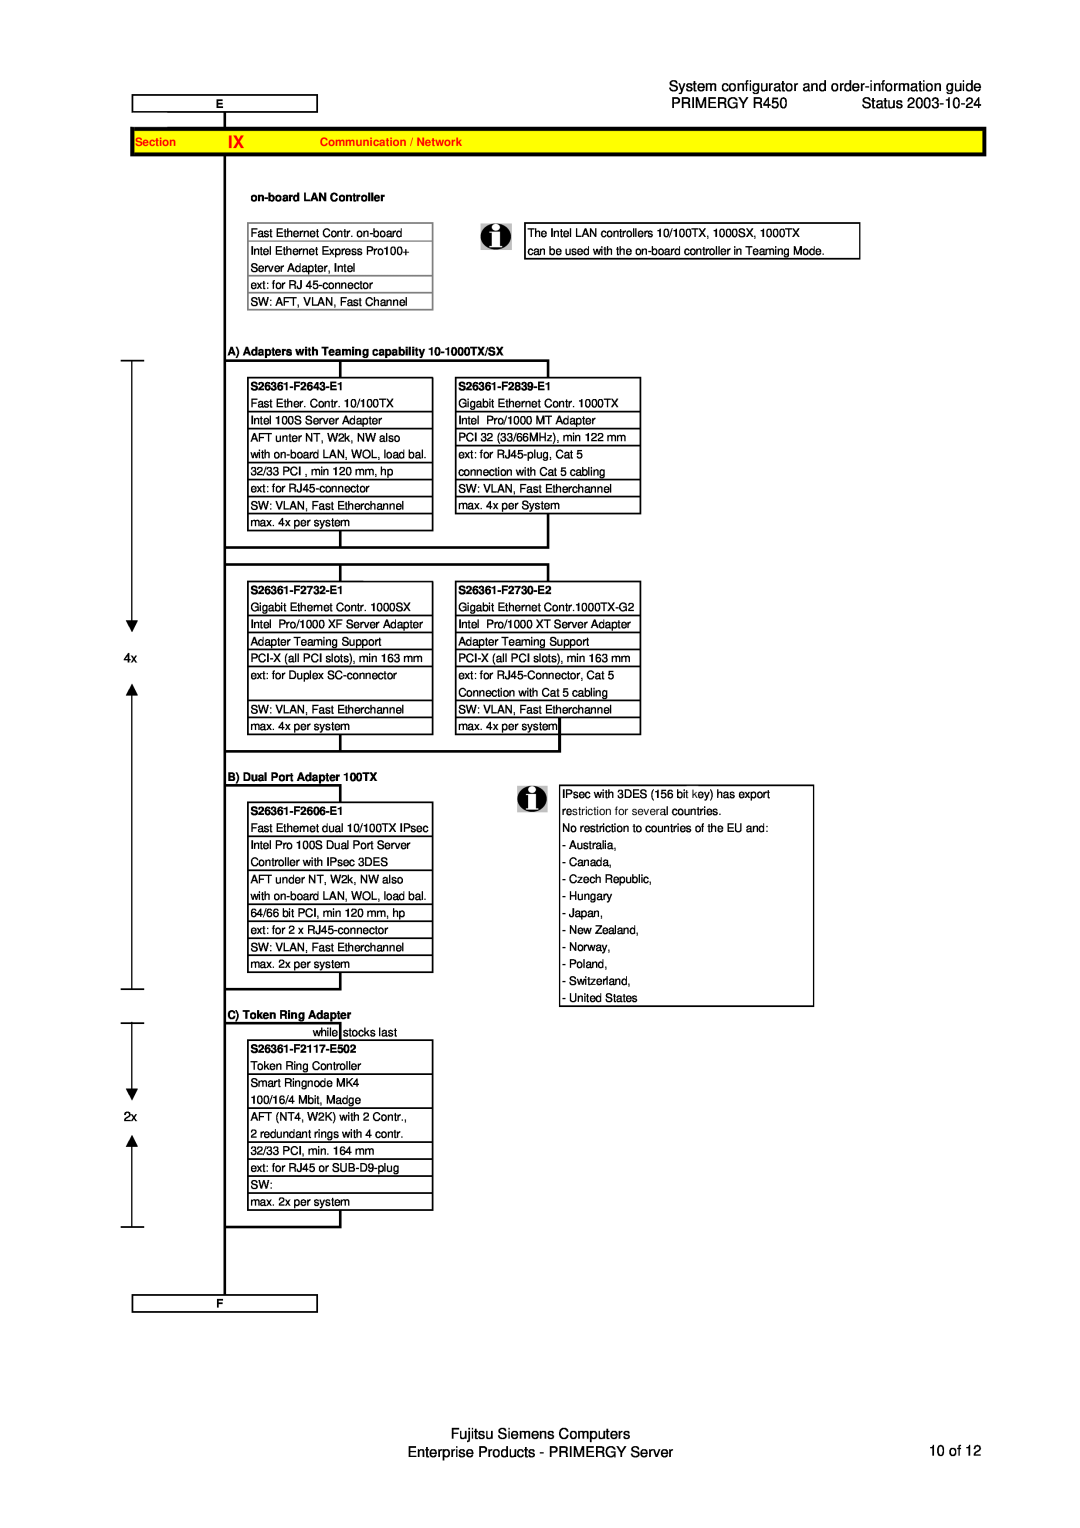 Fujitsu manual System configurator and order-information guide, PRIMERGY R450, Fujitsu Siemens Computers, Status, 10 of 